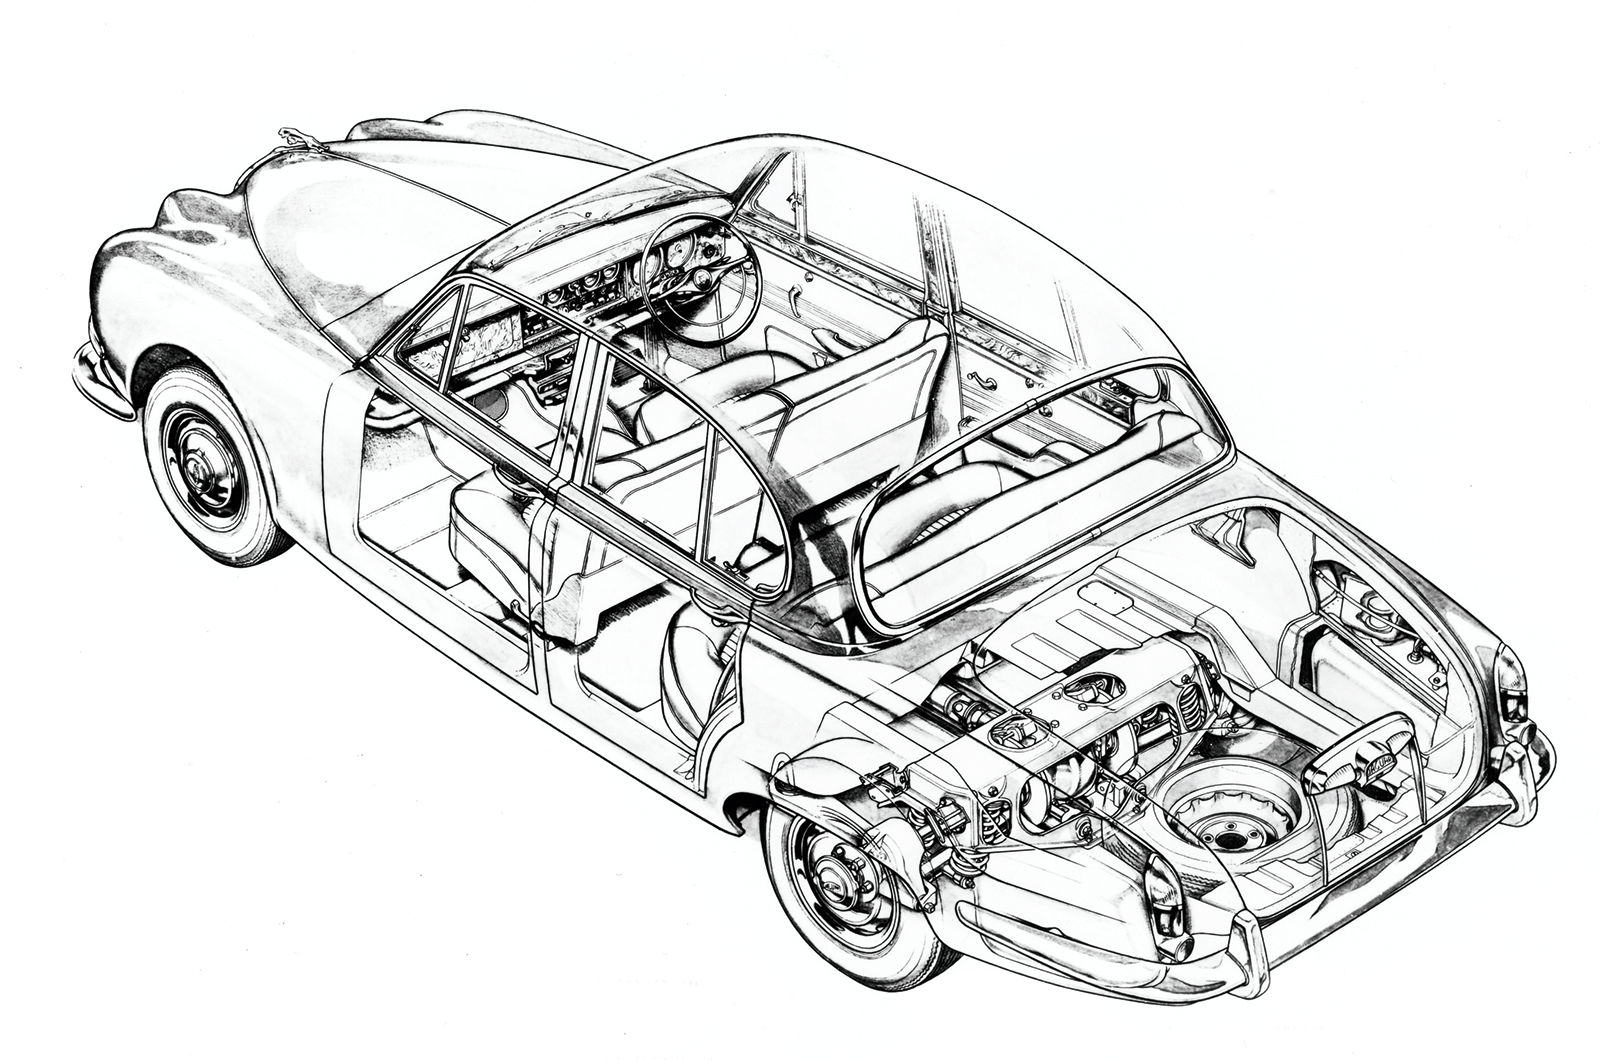 Classic & Sports Car – Buyer’s guide: Jaguar S-type